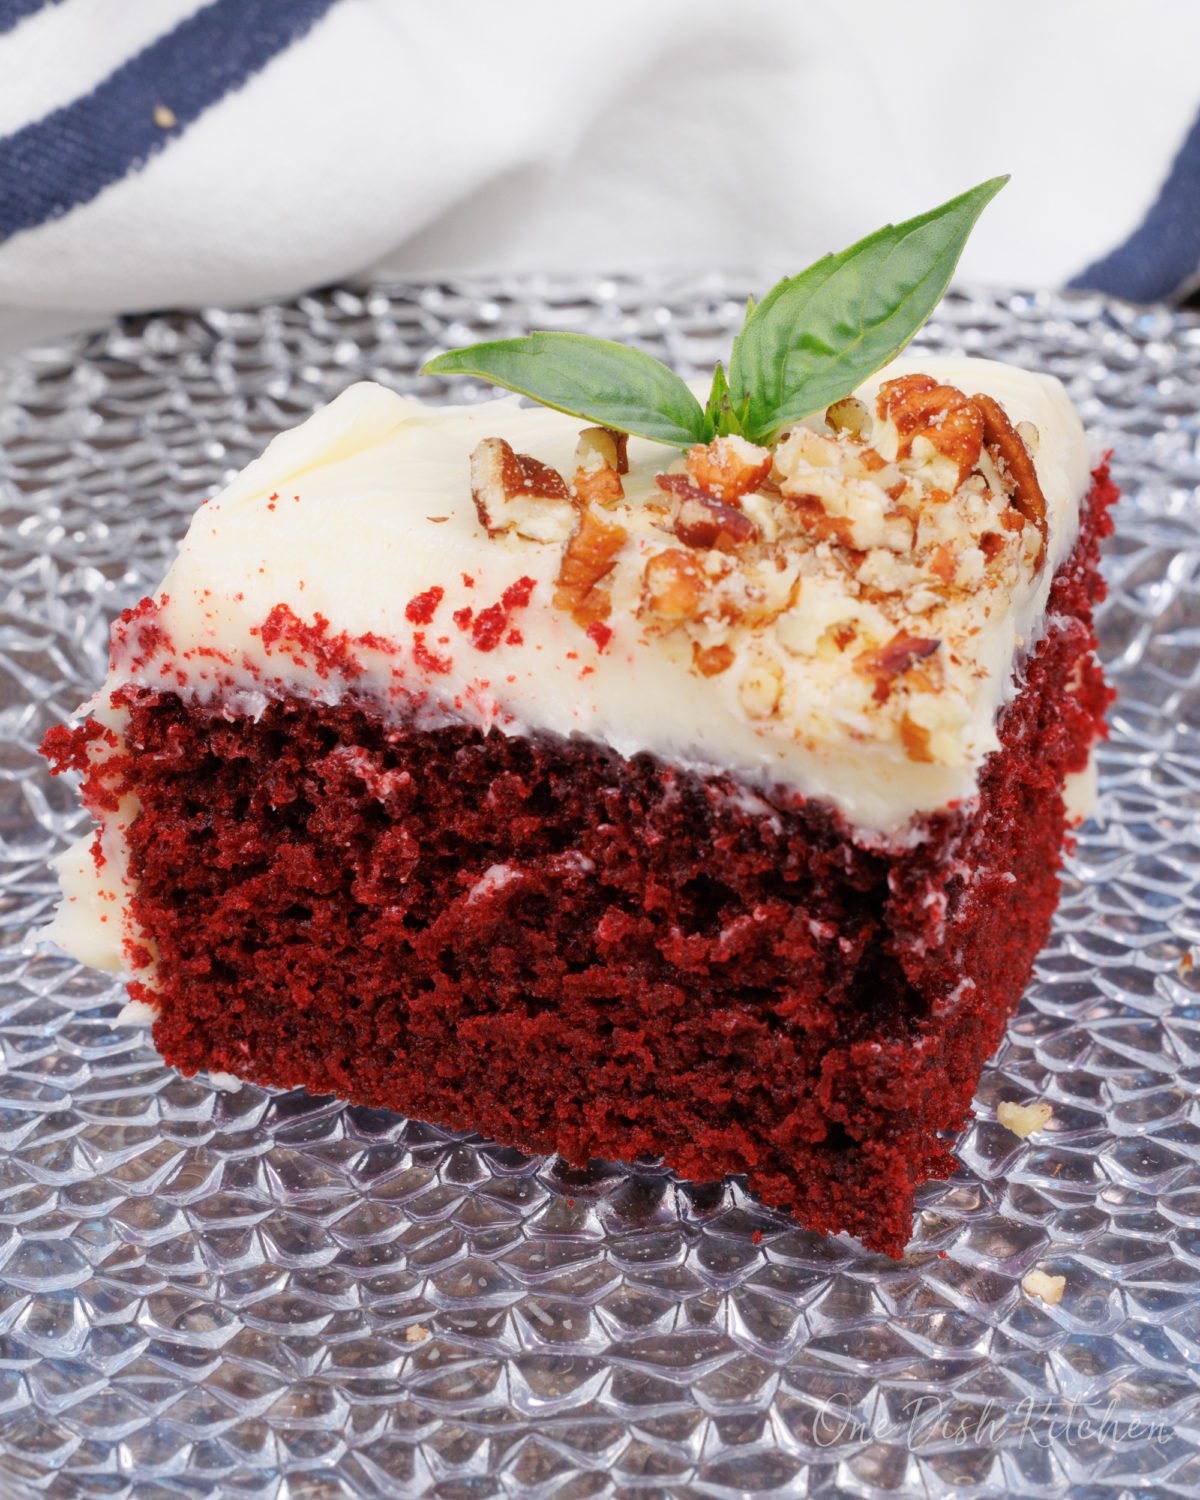 https://onedishkitchen.com/wp-content/uploads/2022/01/red-velvet-cake-one-dish-kitchen-2500-1-1200x1500.jpg